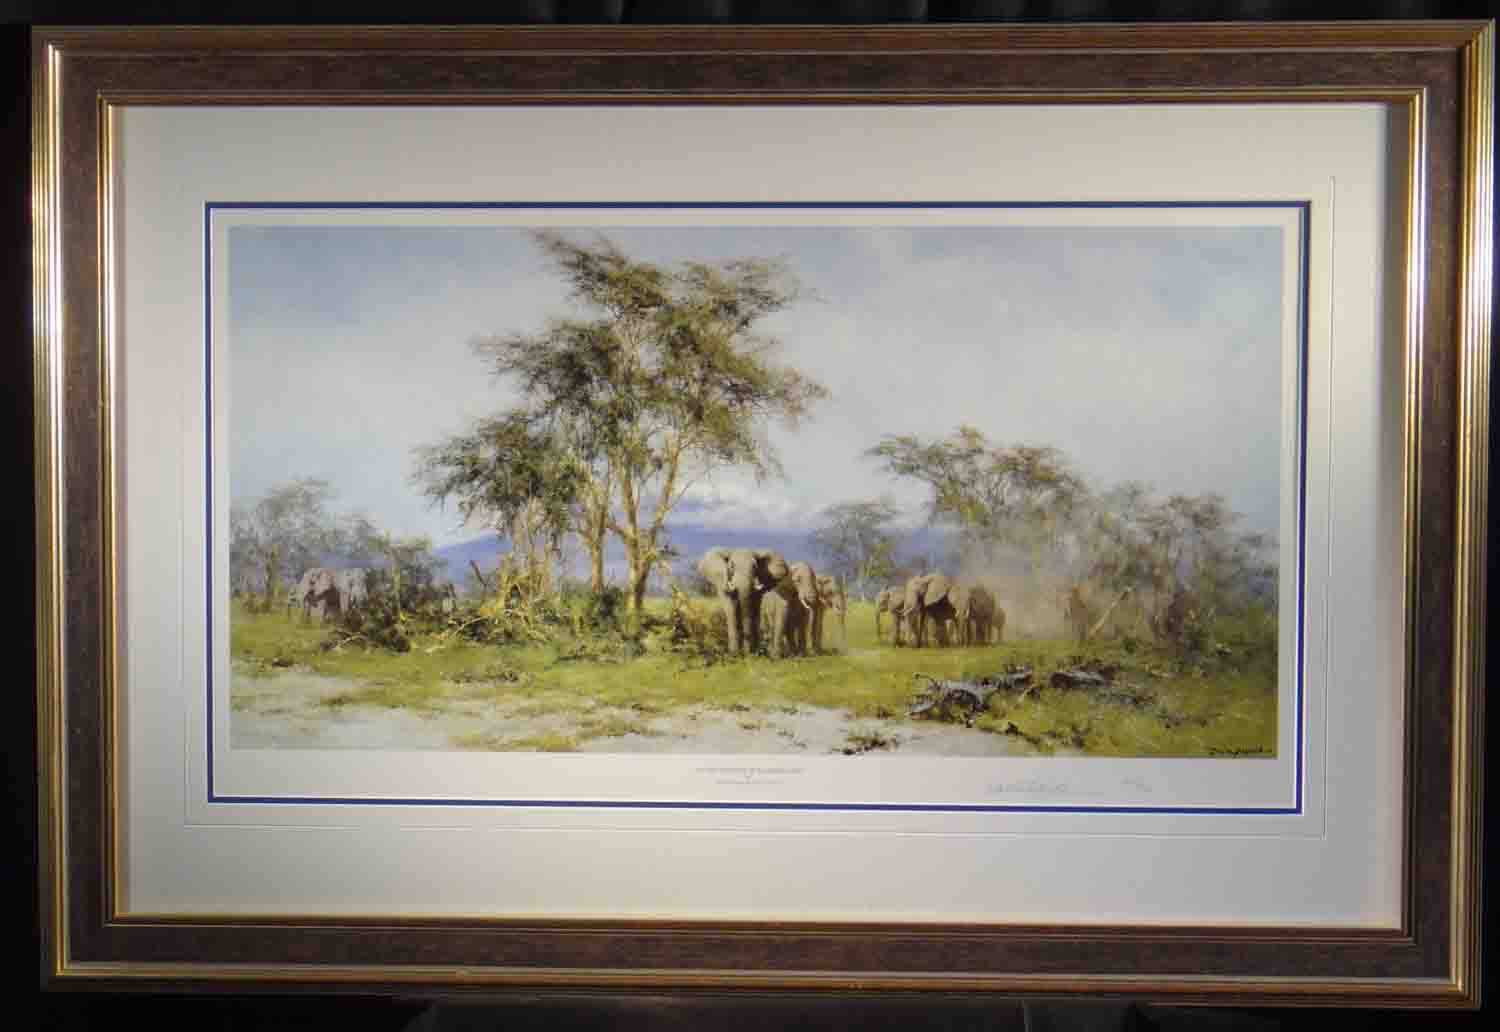 david shepherd in the shadow of Kilimanjaro